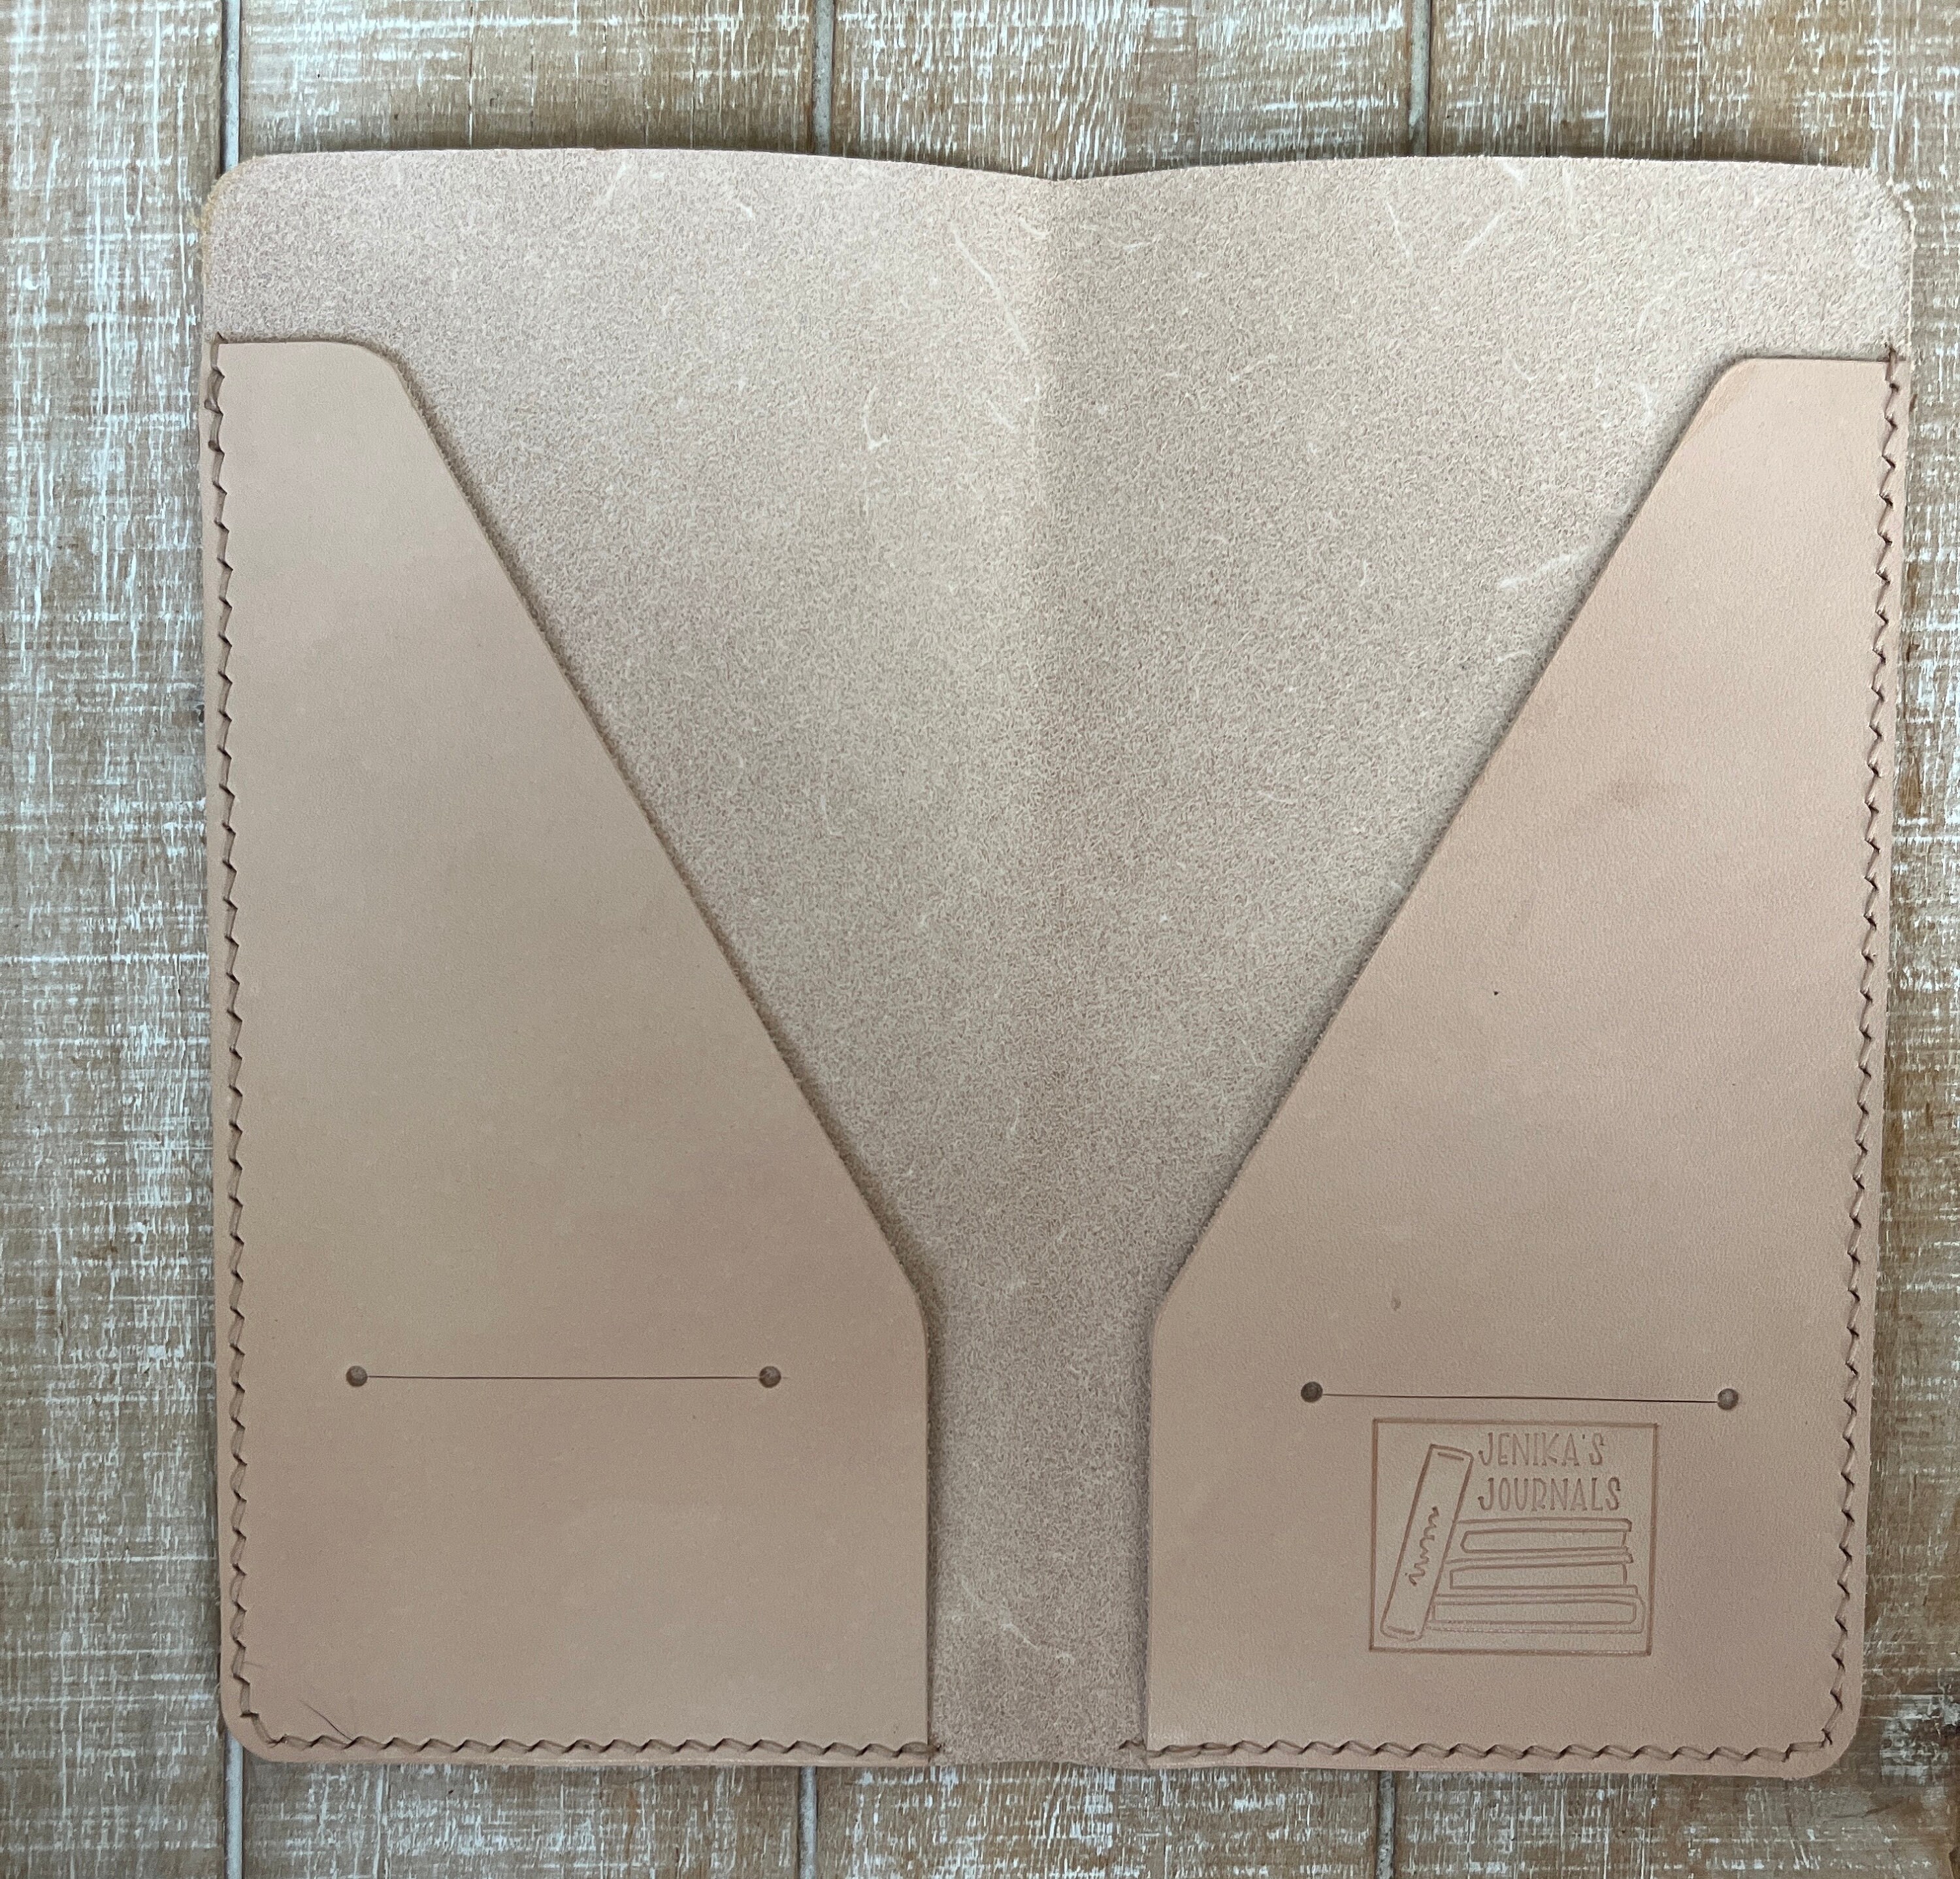 Kraft paper folder for Traveler's Notebook, Regular size, Folder insert,  Card holder, Midori accessories, Midori insert